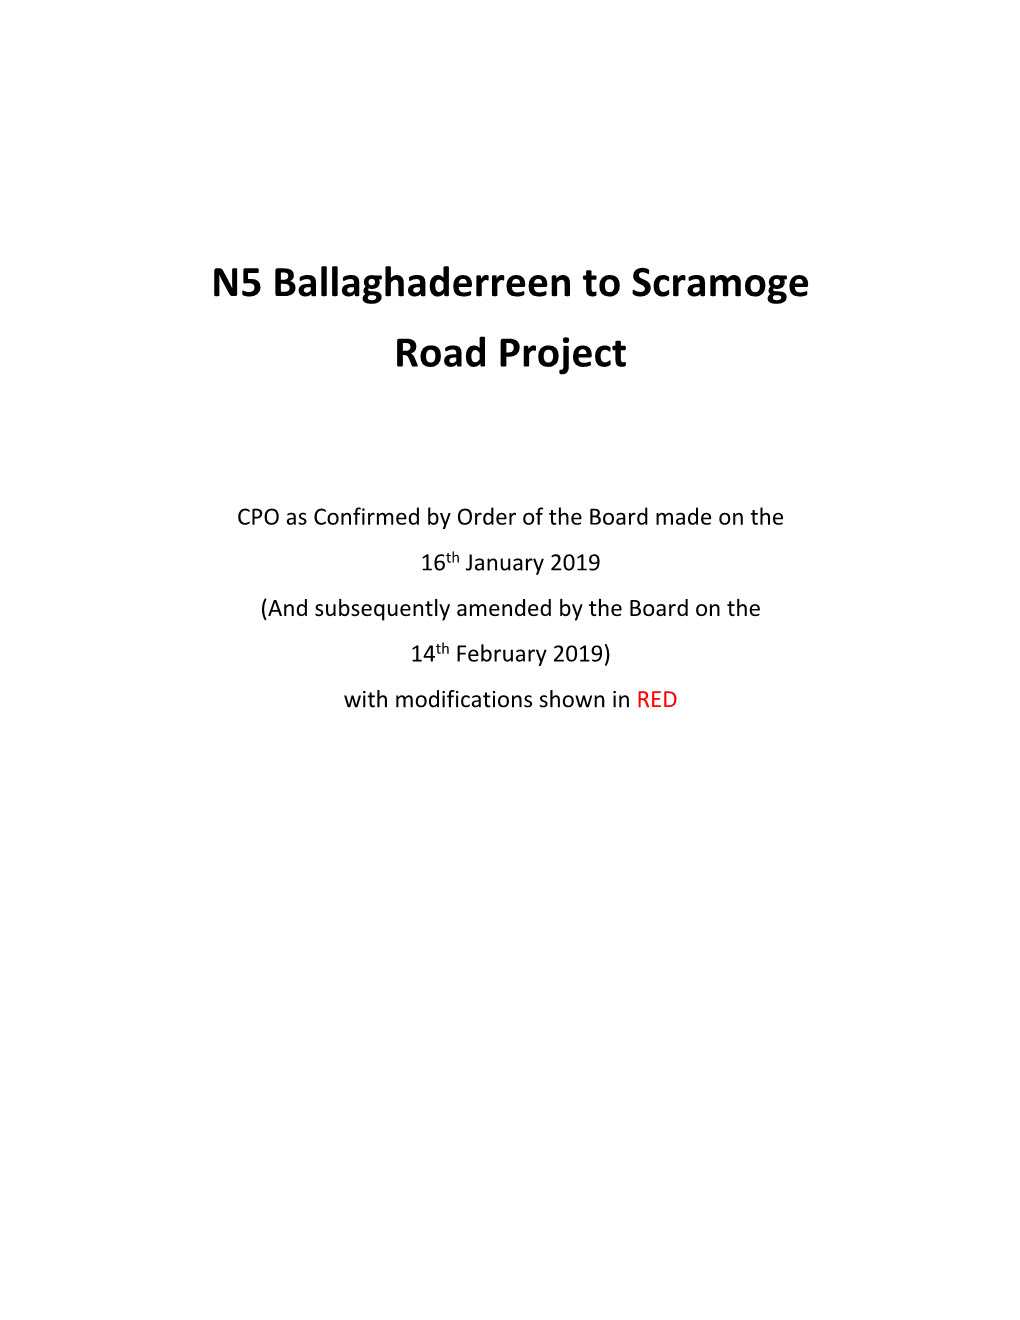 N5 Ballaghaderreen to Scramoge Road Project